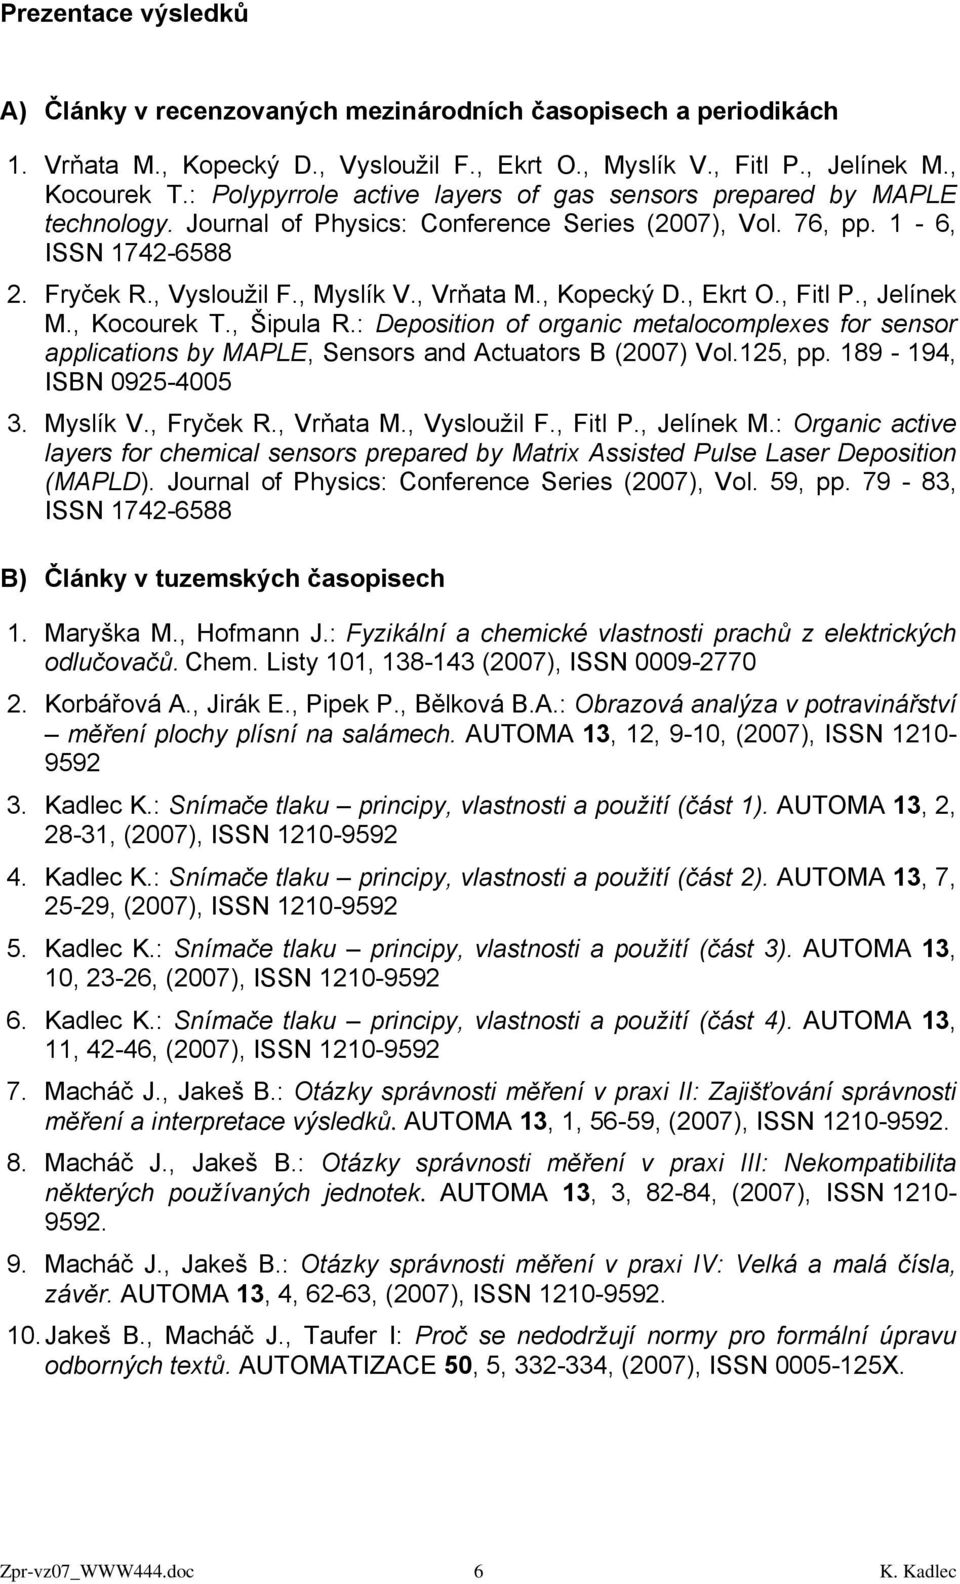 , Kopecký D., Ekrt O., Fitl P., Jelínek M., Kocourek T., Šipula R.: Deposition of organic metalocomplexes for sensor applications by MAPLE, Sensors and Actuators B (2007) Vol.125, pp.